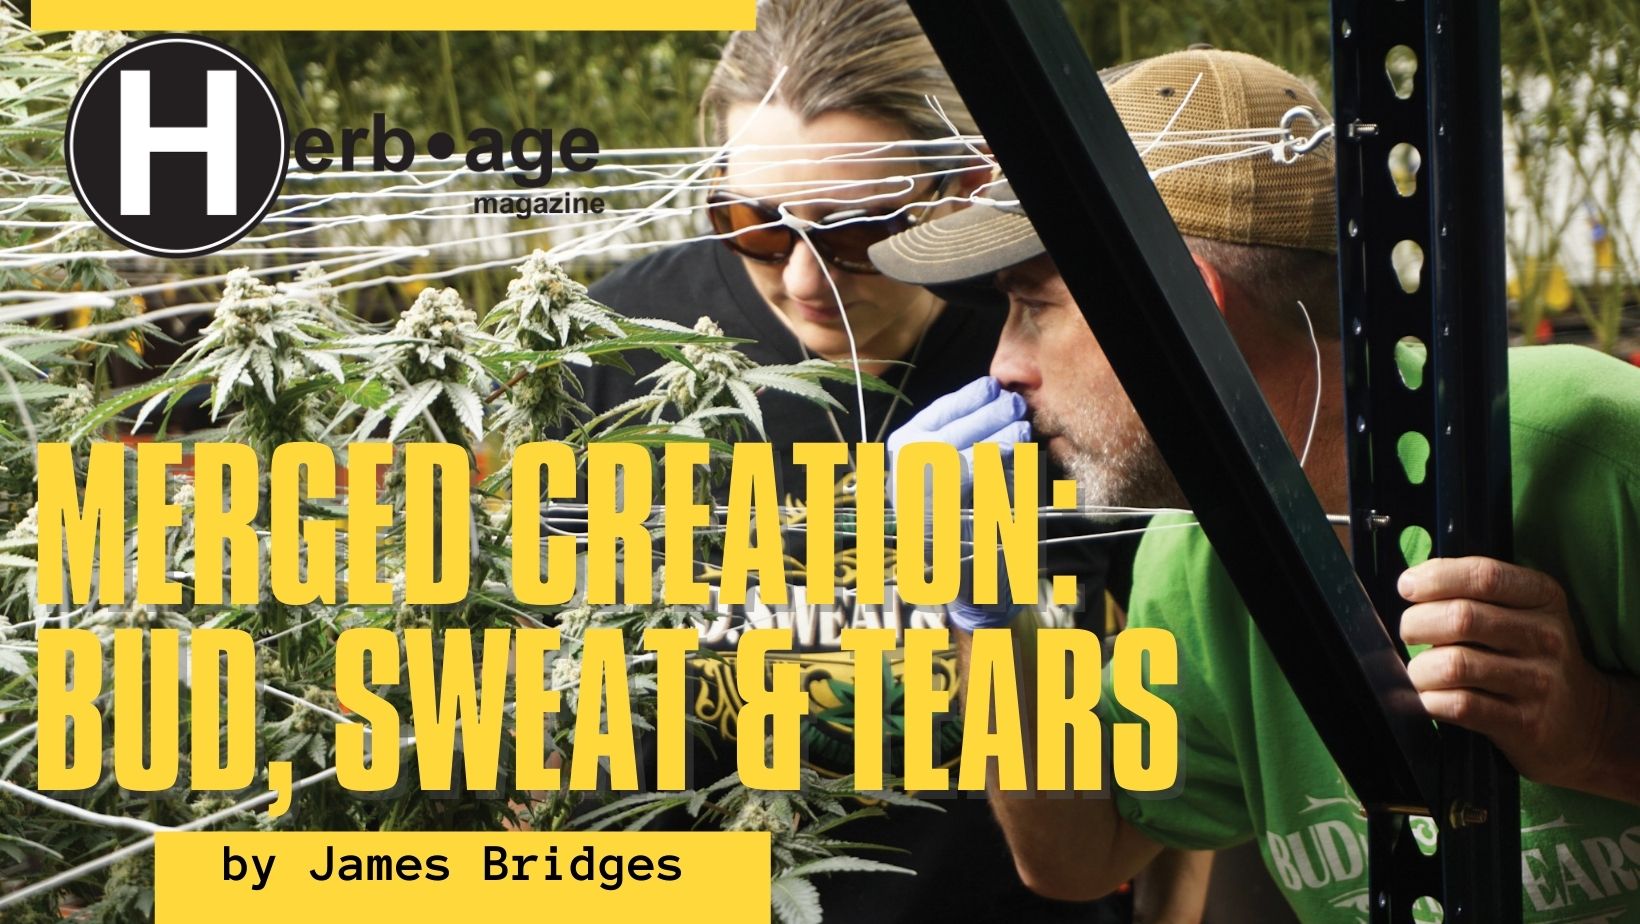 Merged Creation: Bud, Sweat & Tears